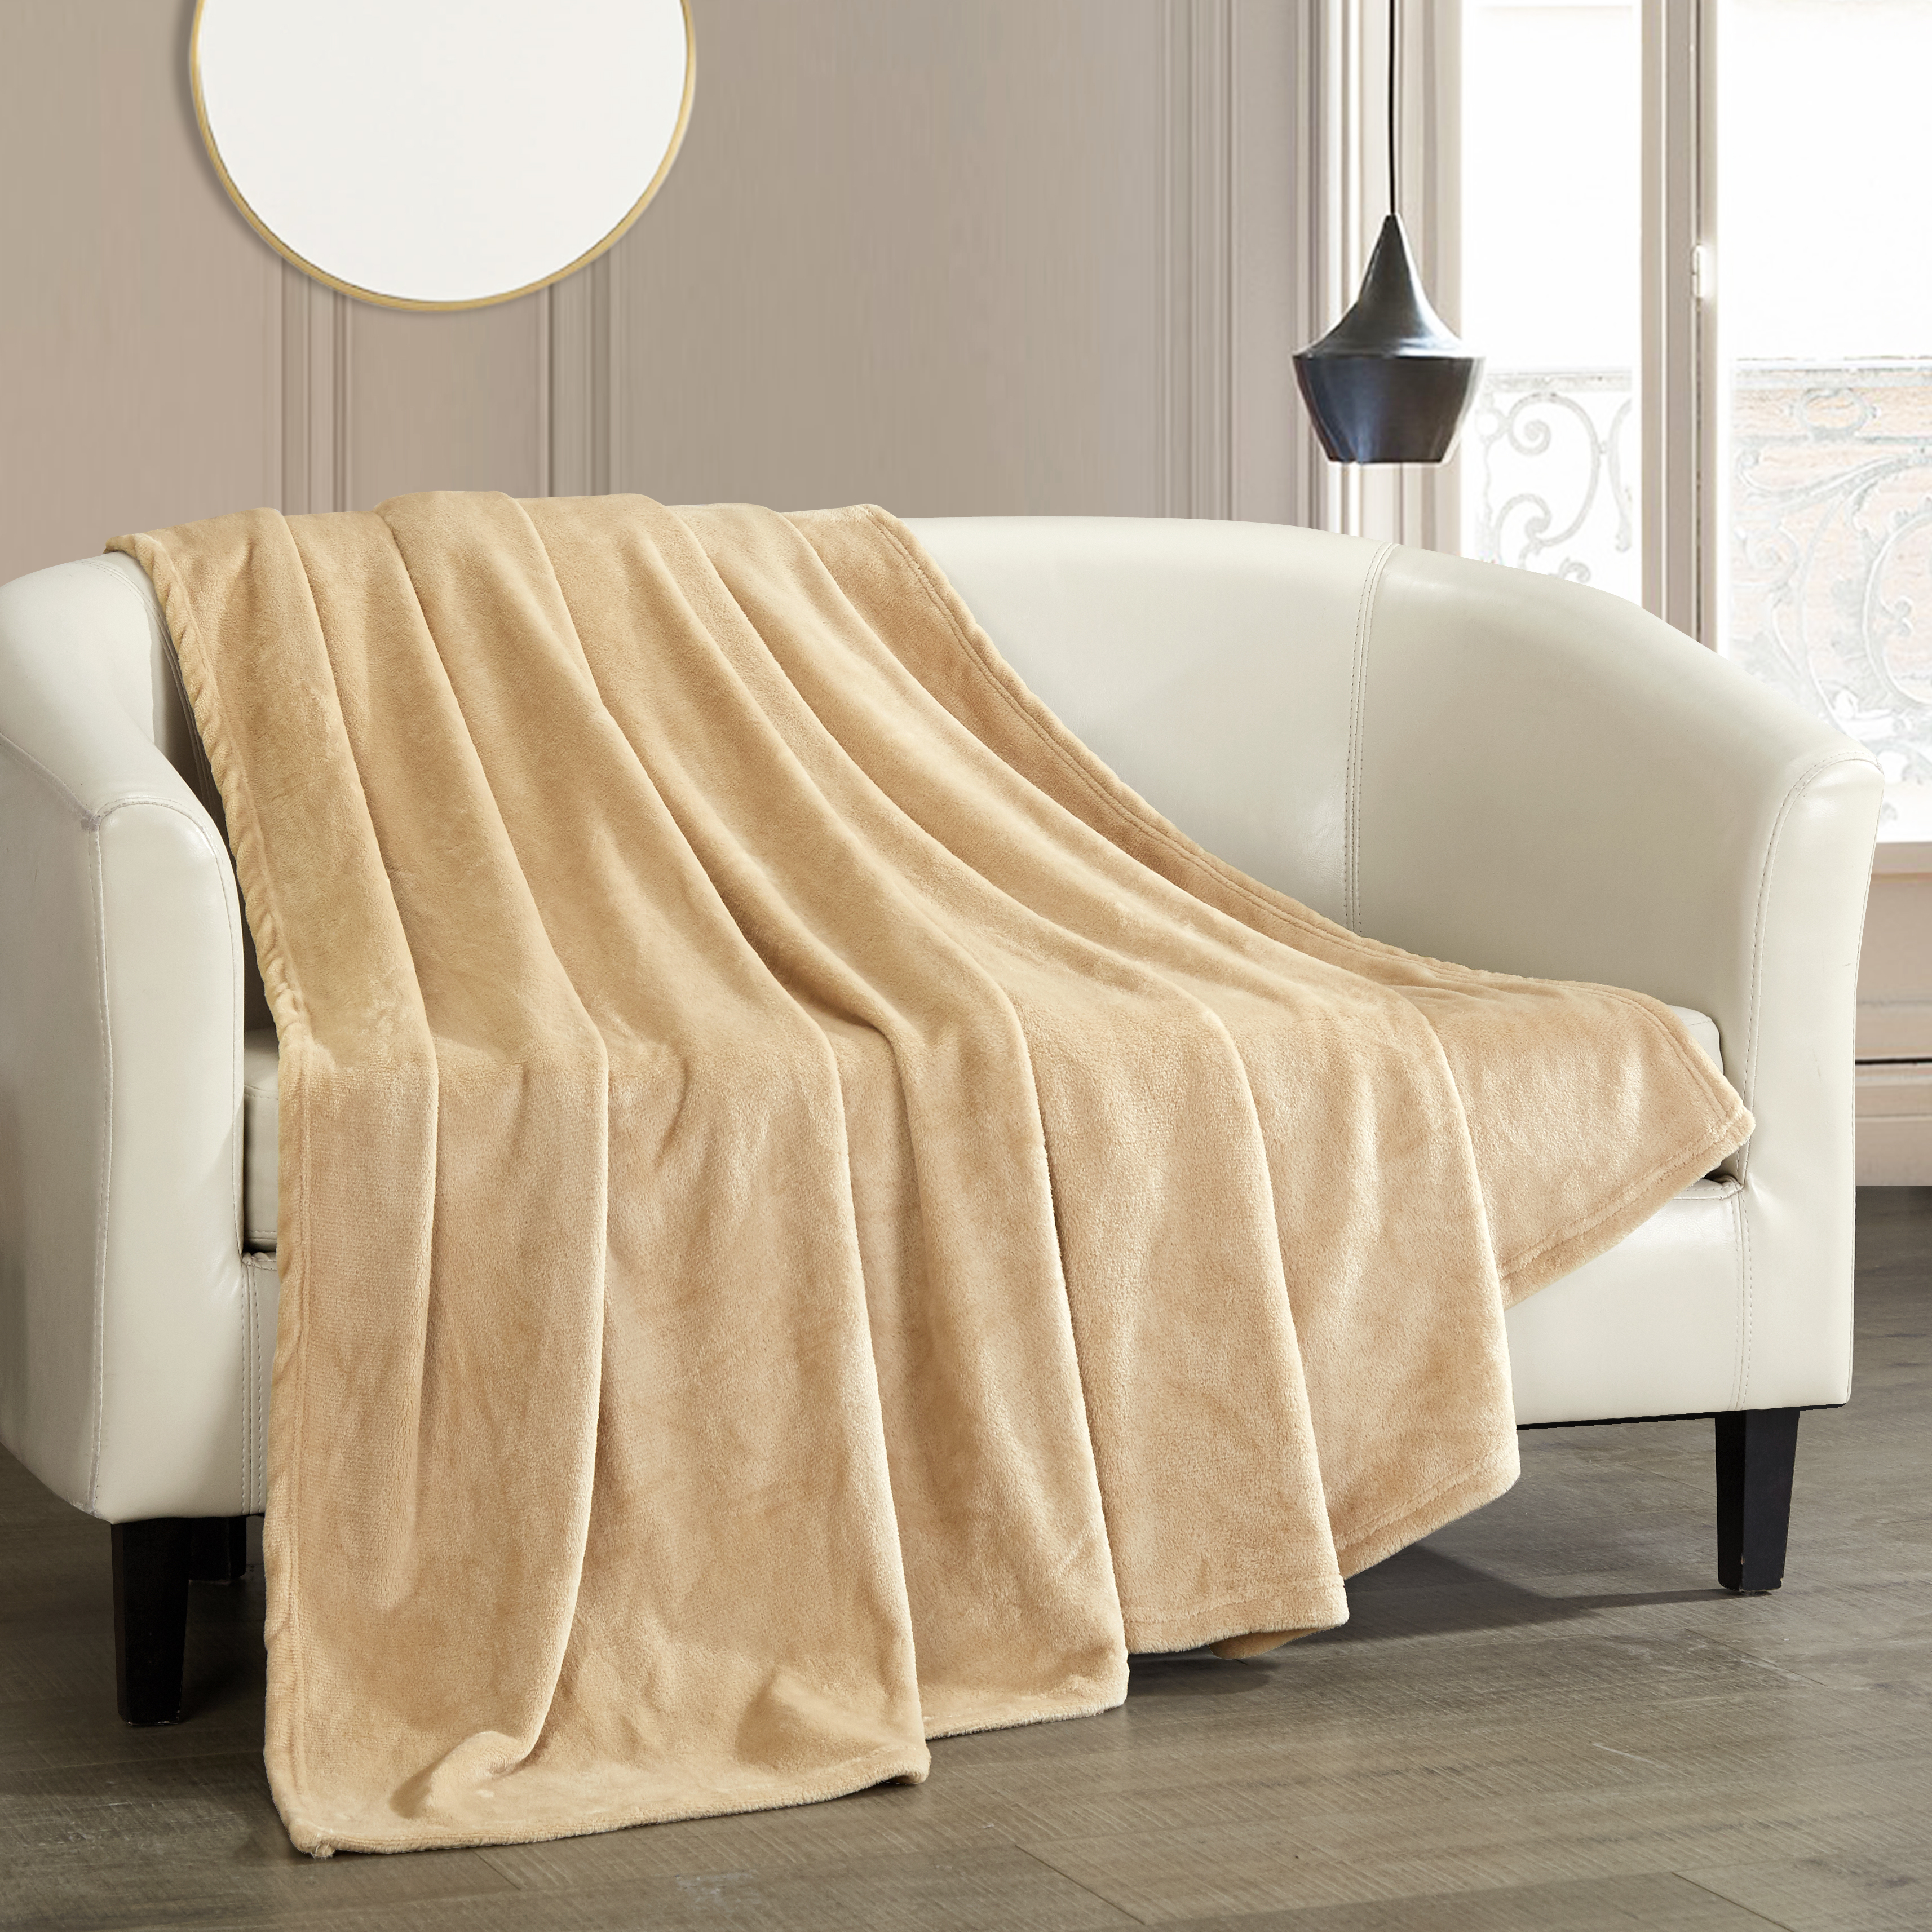 Kaeden Throw Blanket Cozy Super Soft Ultra Plush Micro Mink Fleece Decorative Design - Camel